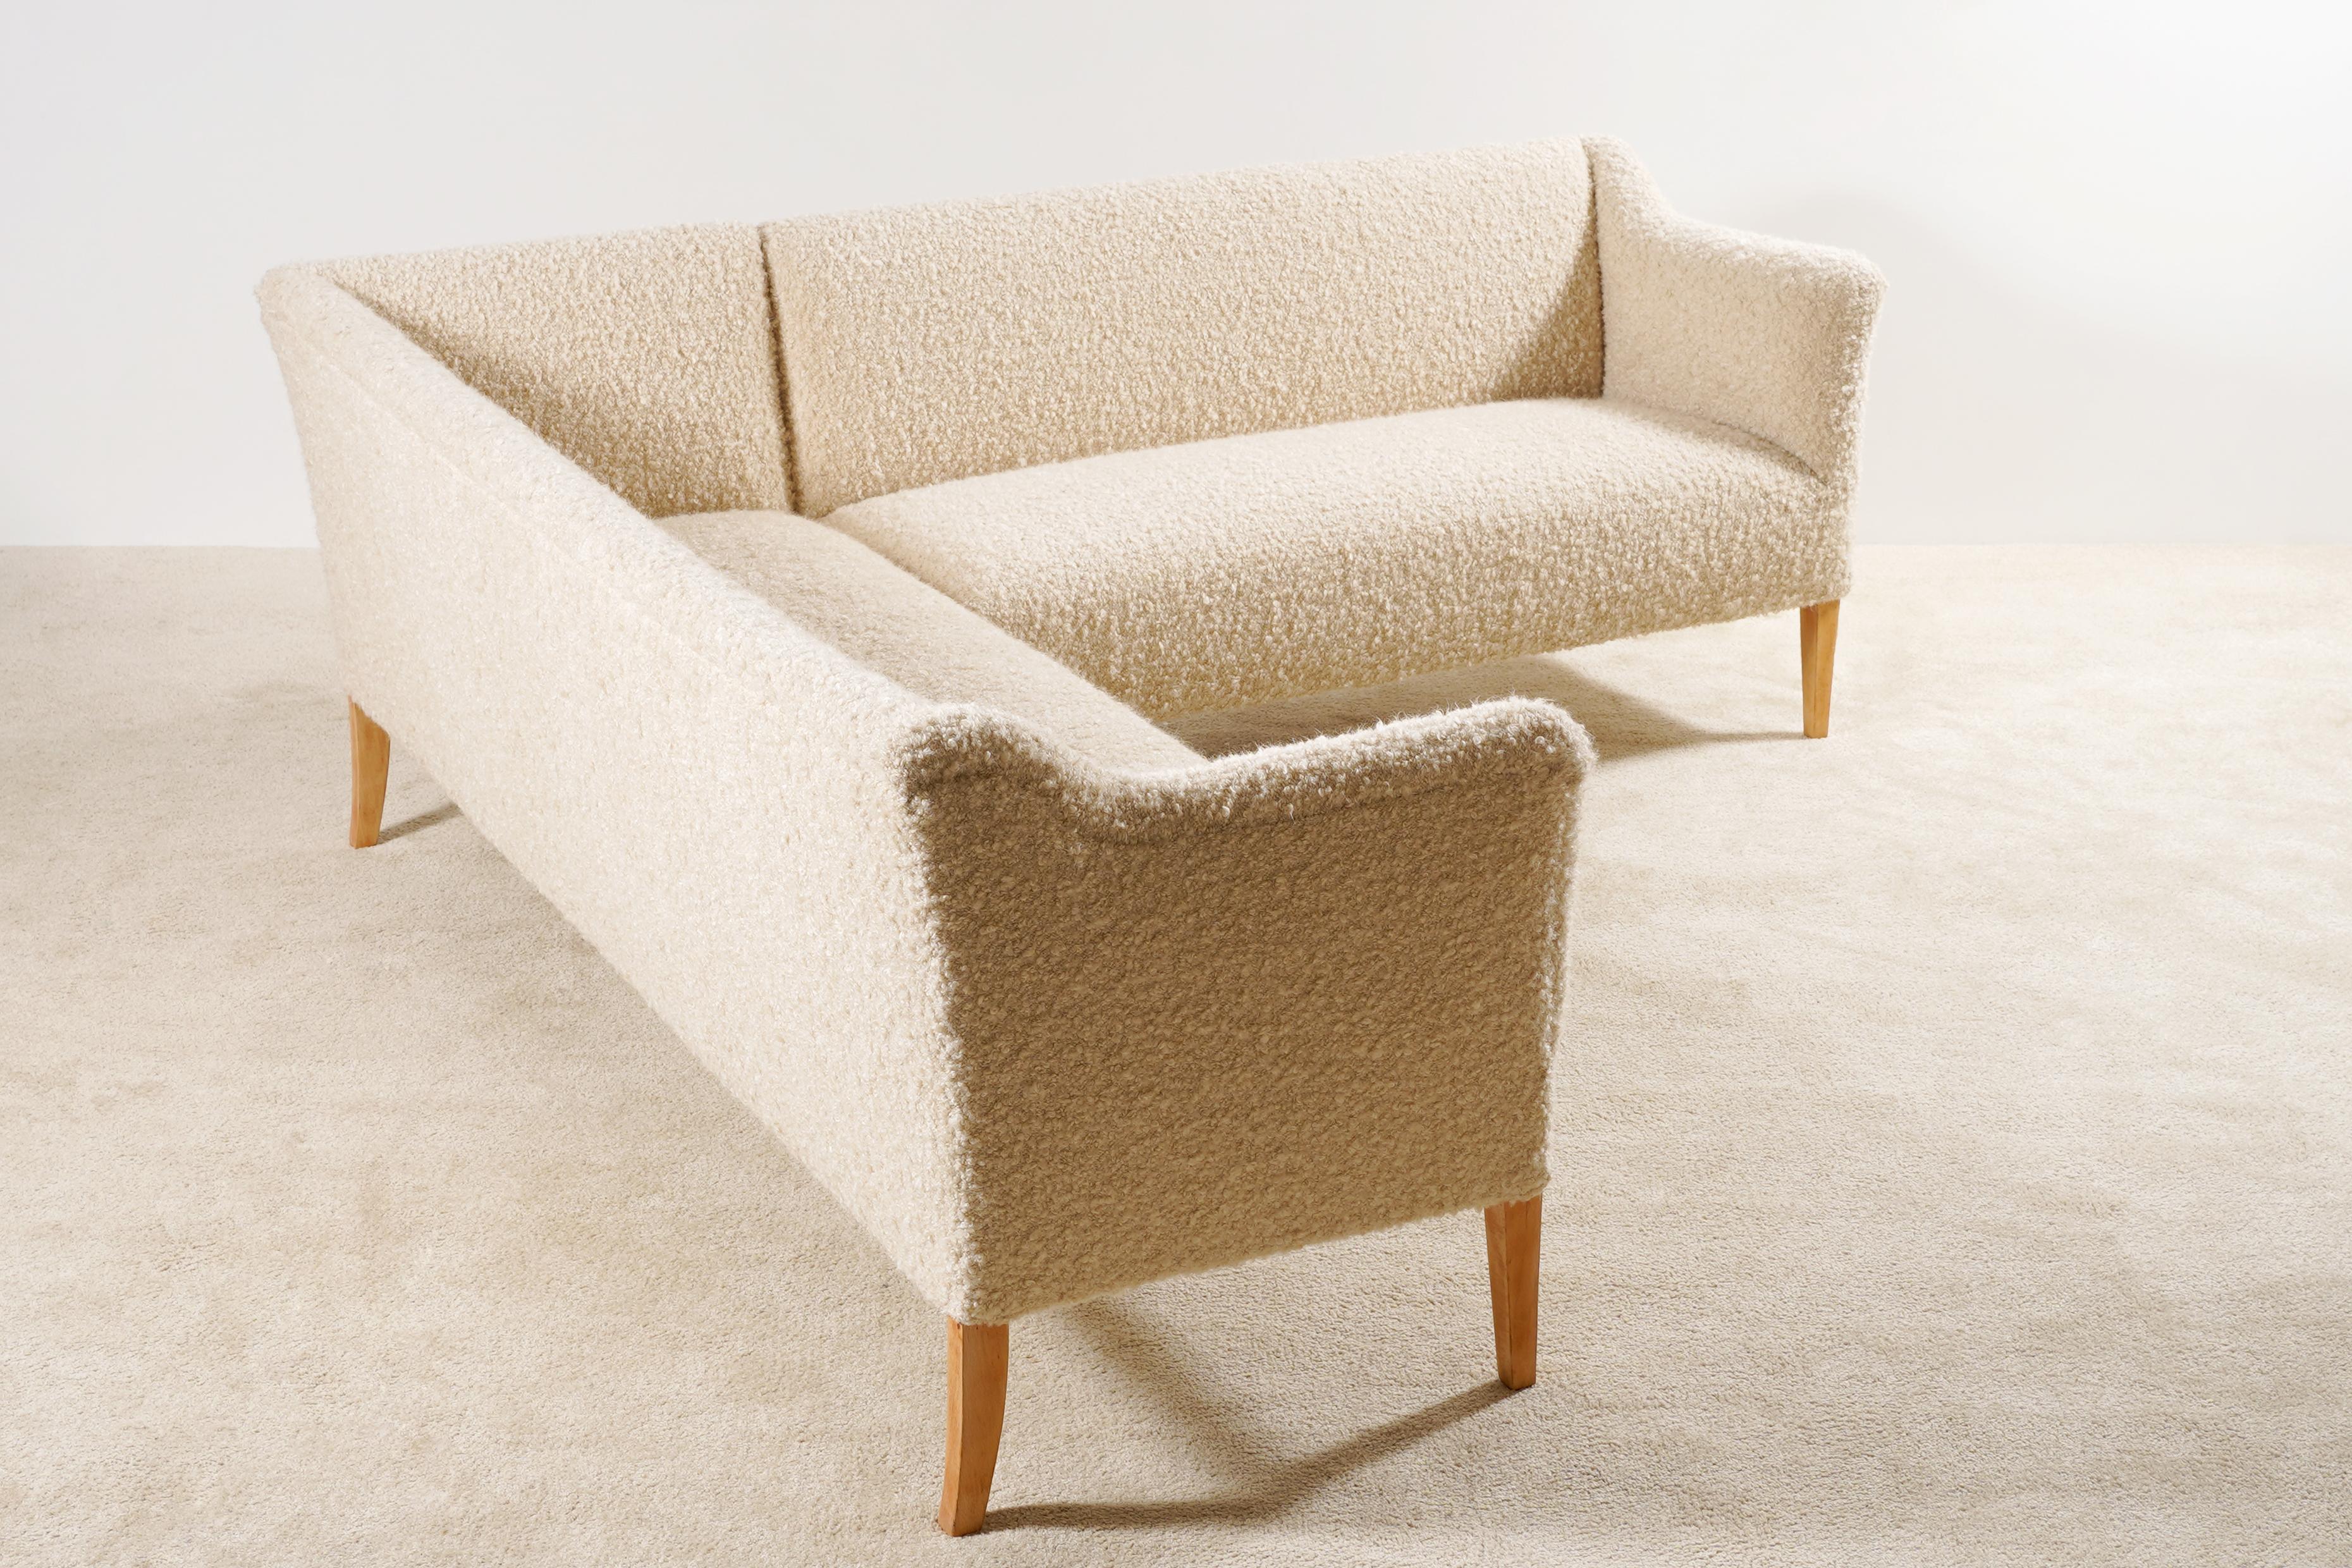 Mid-20th Century Danish Corner Sofa, Original Piece from the 1950s Newly Upholstered